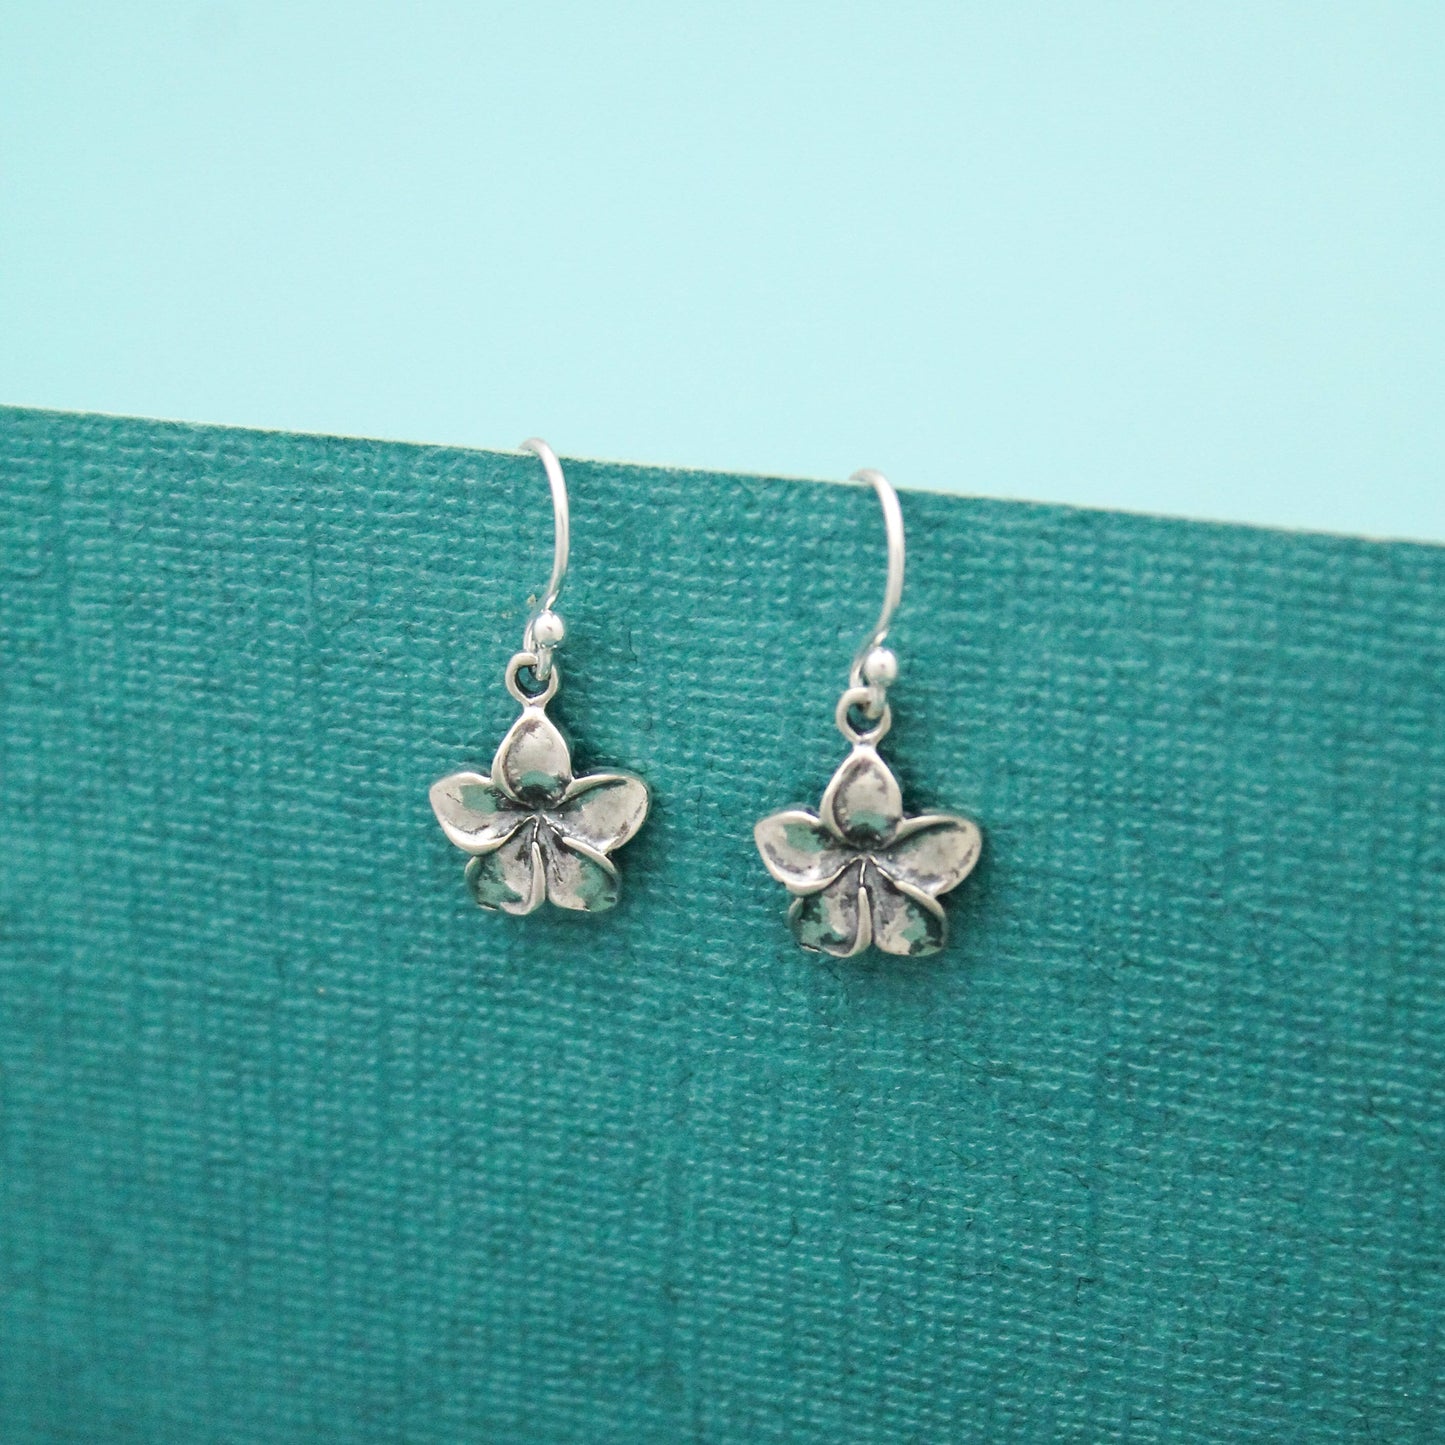 Cute Plumeria Earrings, Sterling Silver Plumeria Flower Earrings, Hawaii Flower Jewelry, Hawaii Earrings, Mother's Day Gift, Gifts for Her